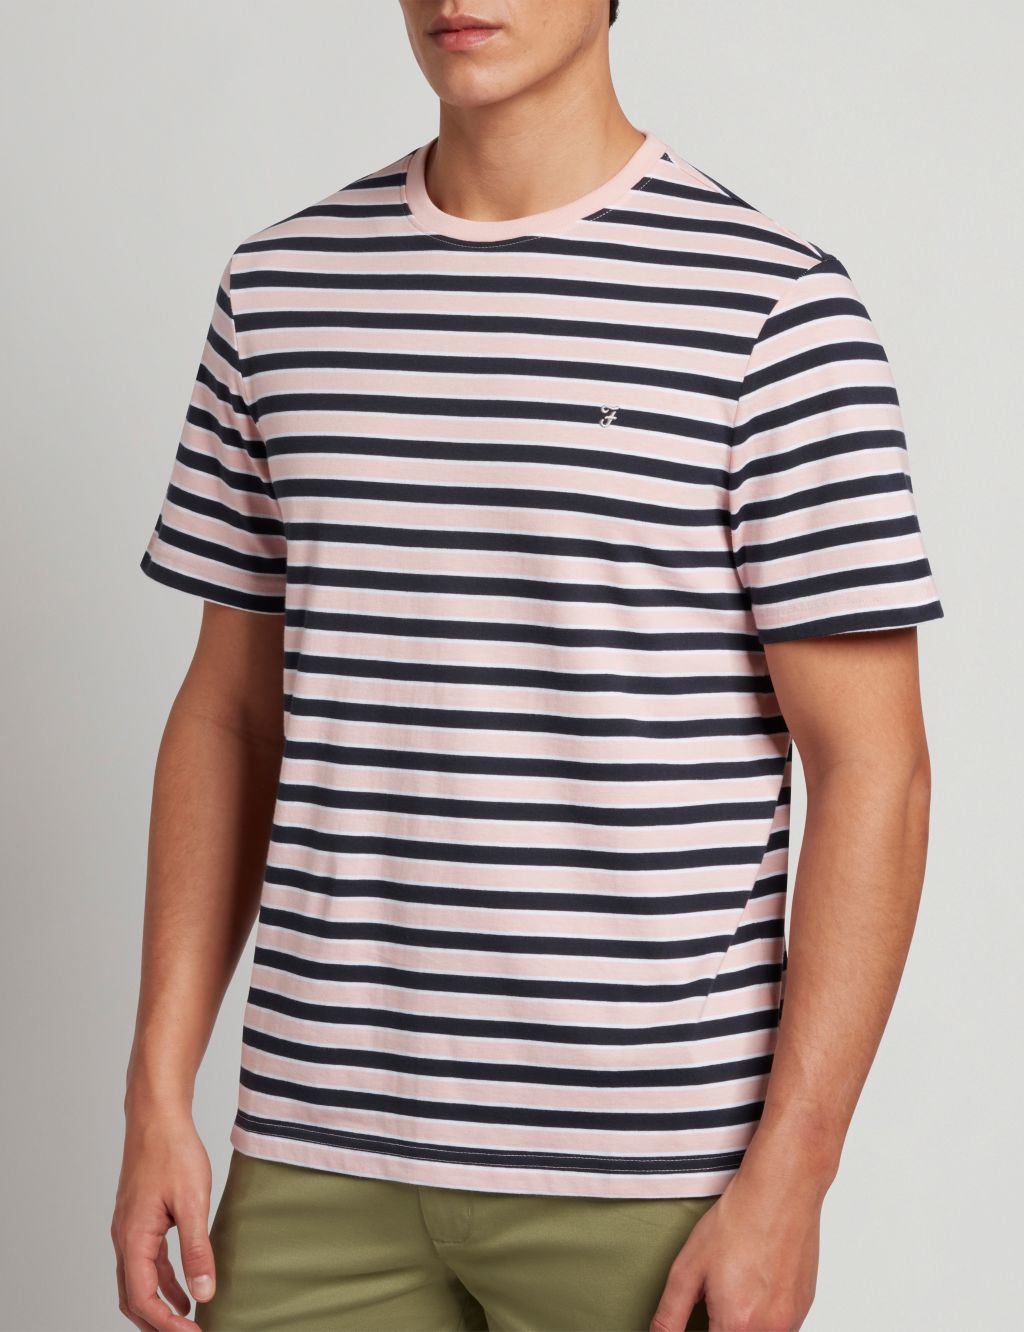 Organic Cotton Striped Crew Neck T-Shirt image 1